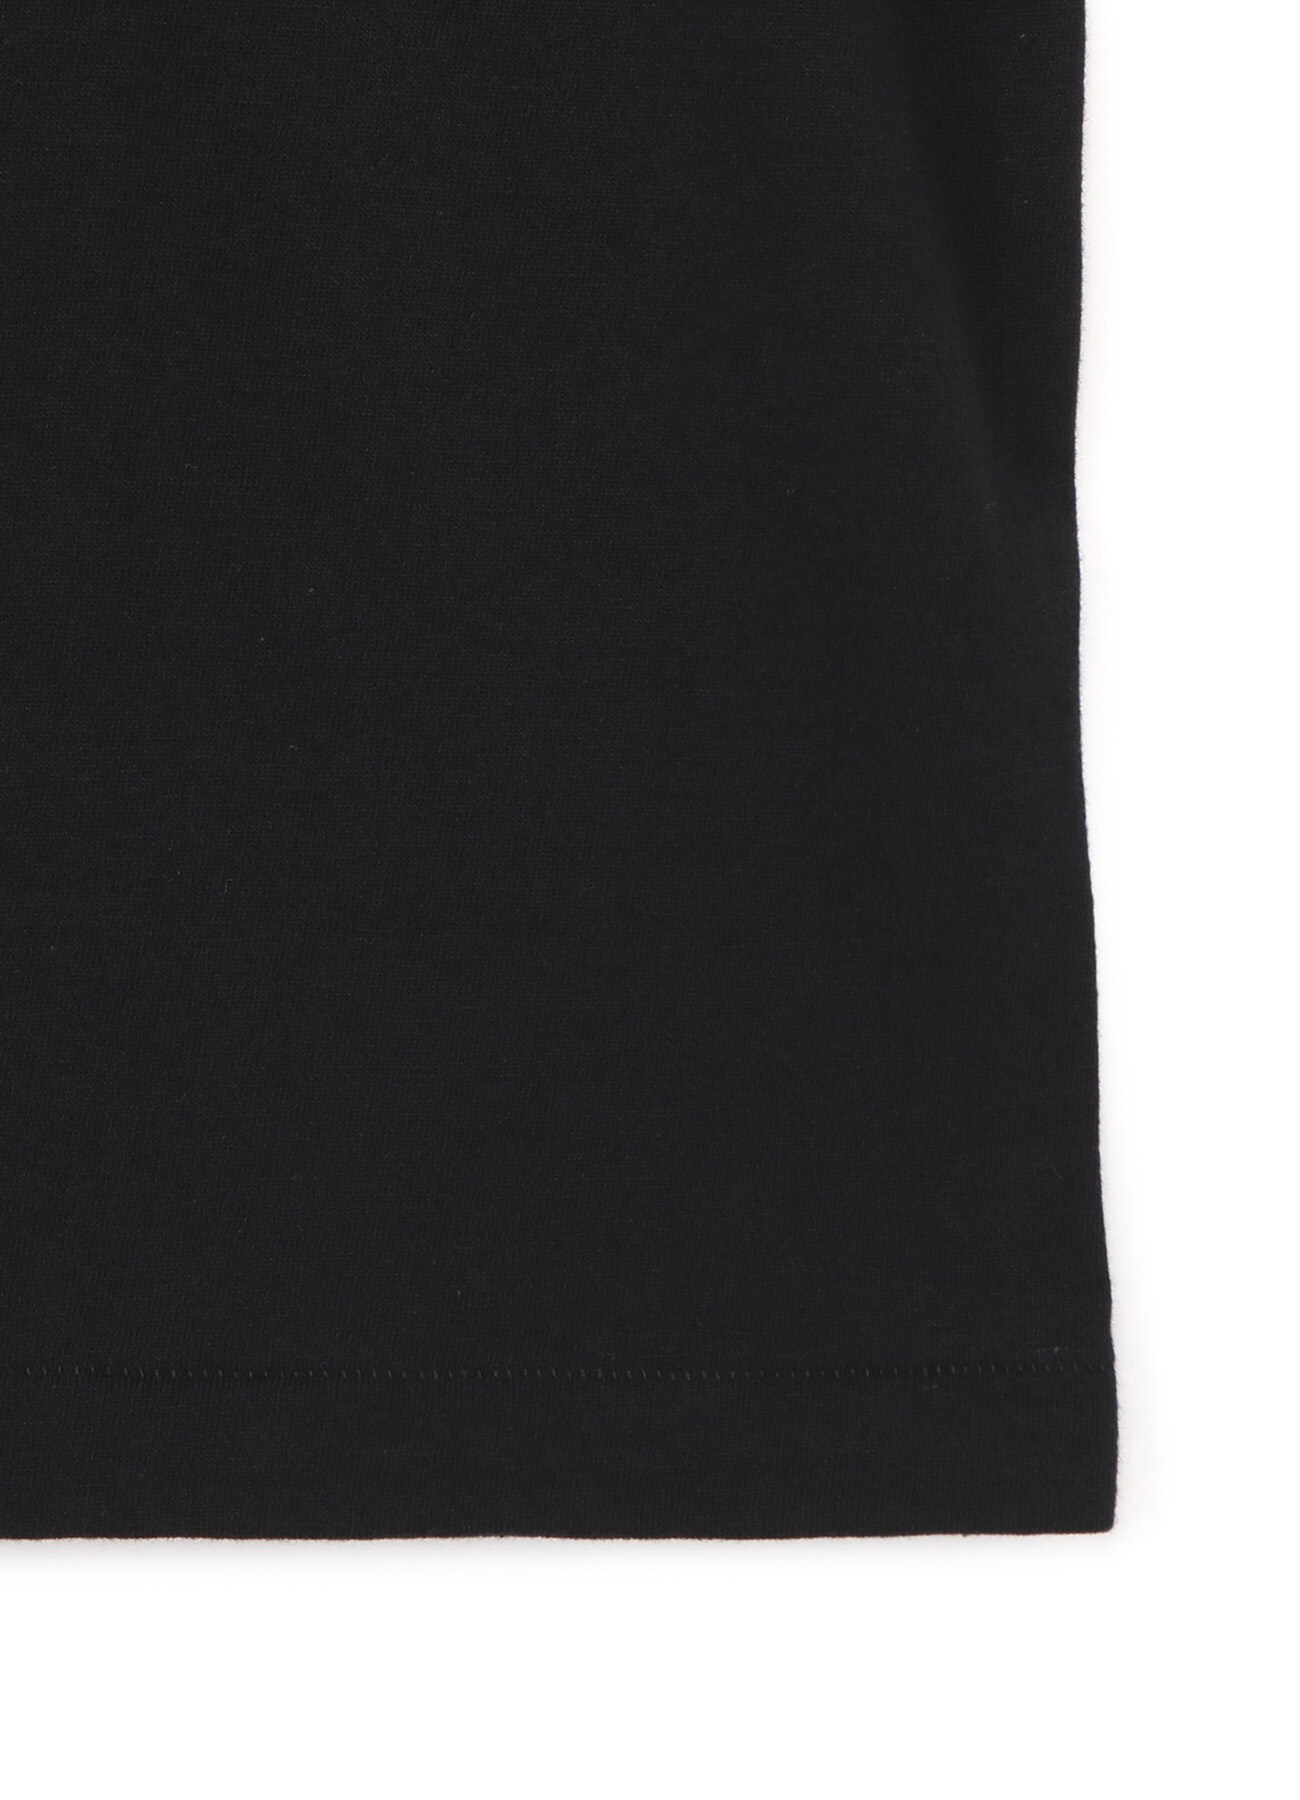 S'YTE × Dick Barnatt / Patti Smith Long Sleeve T-shirt